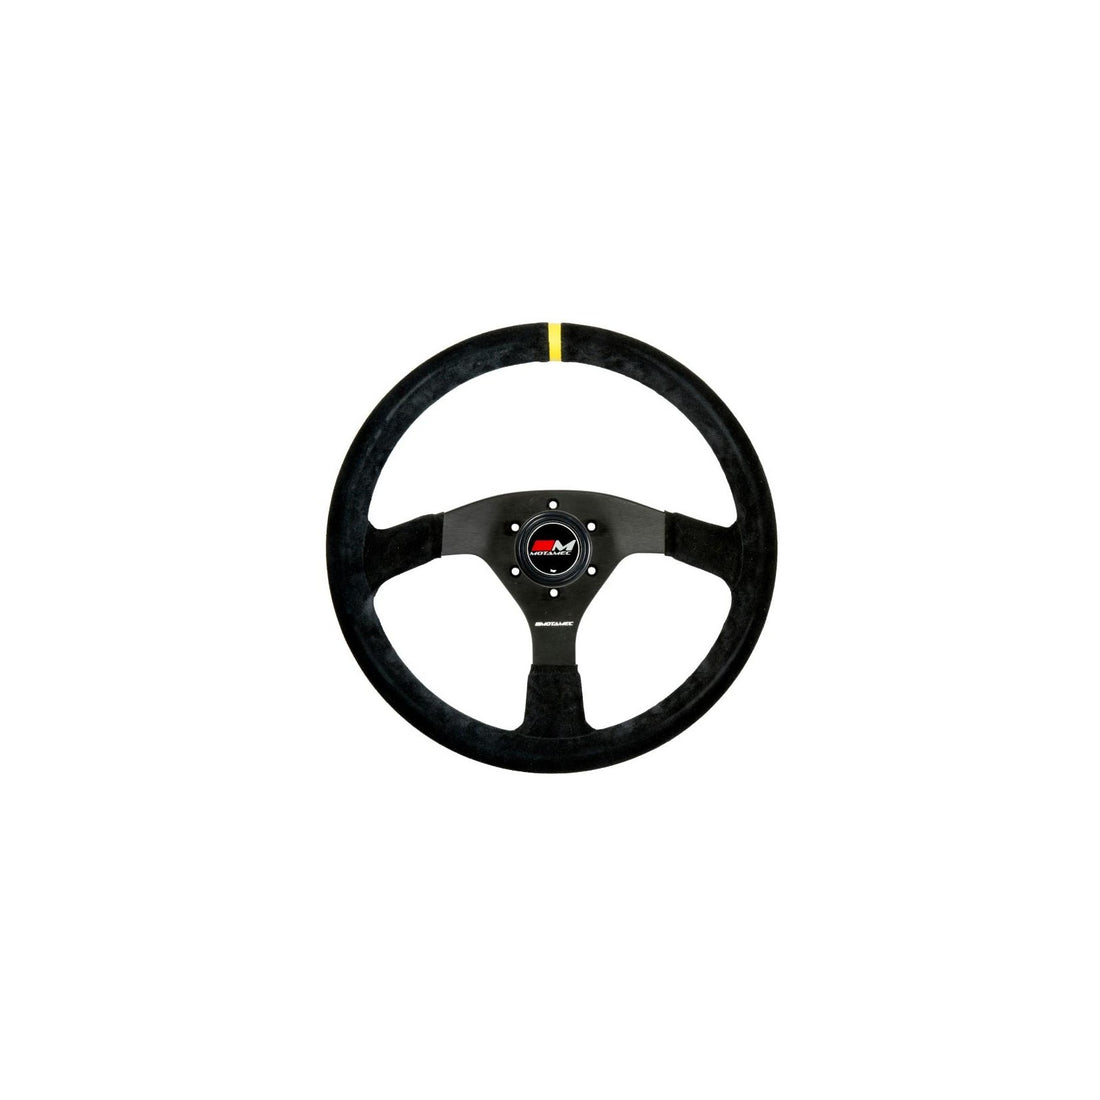 motamec steering wheel and fia quick release boss combo